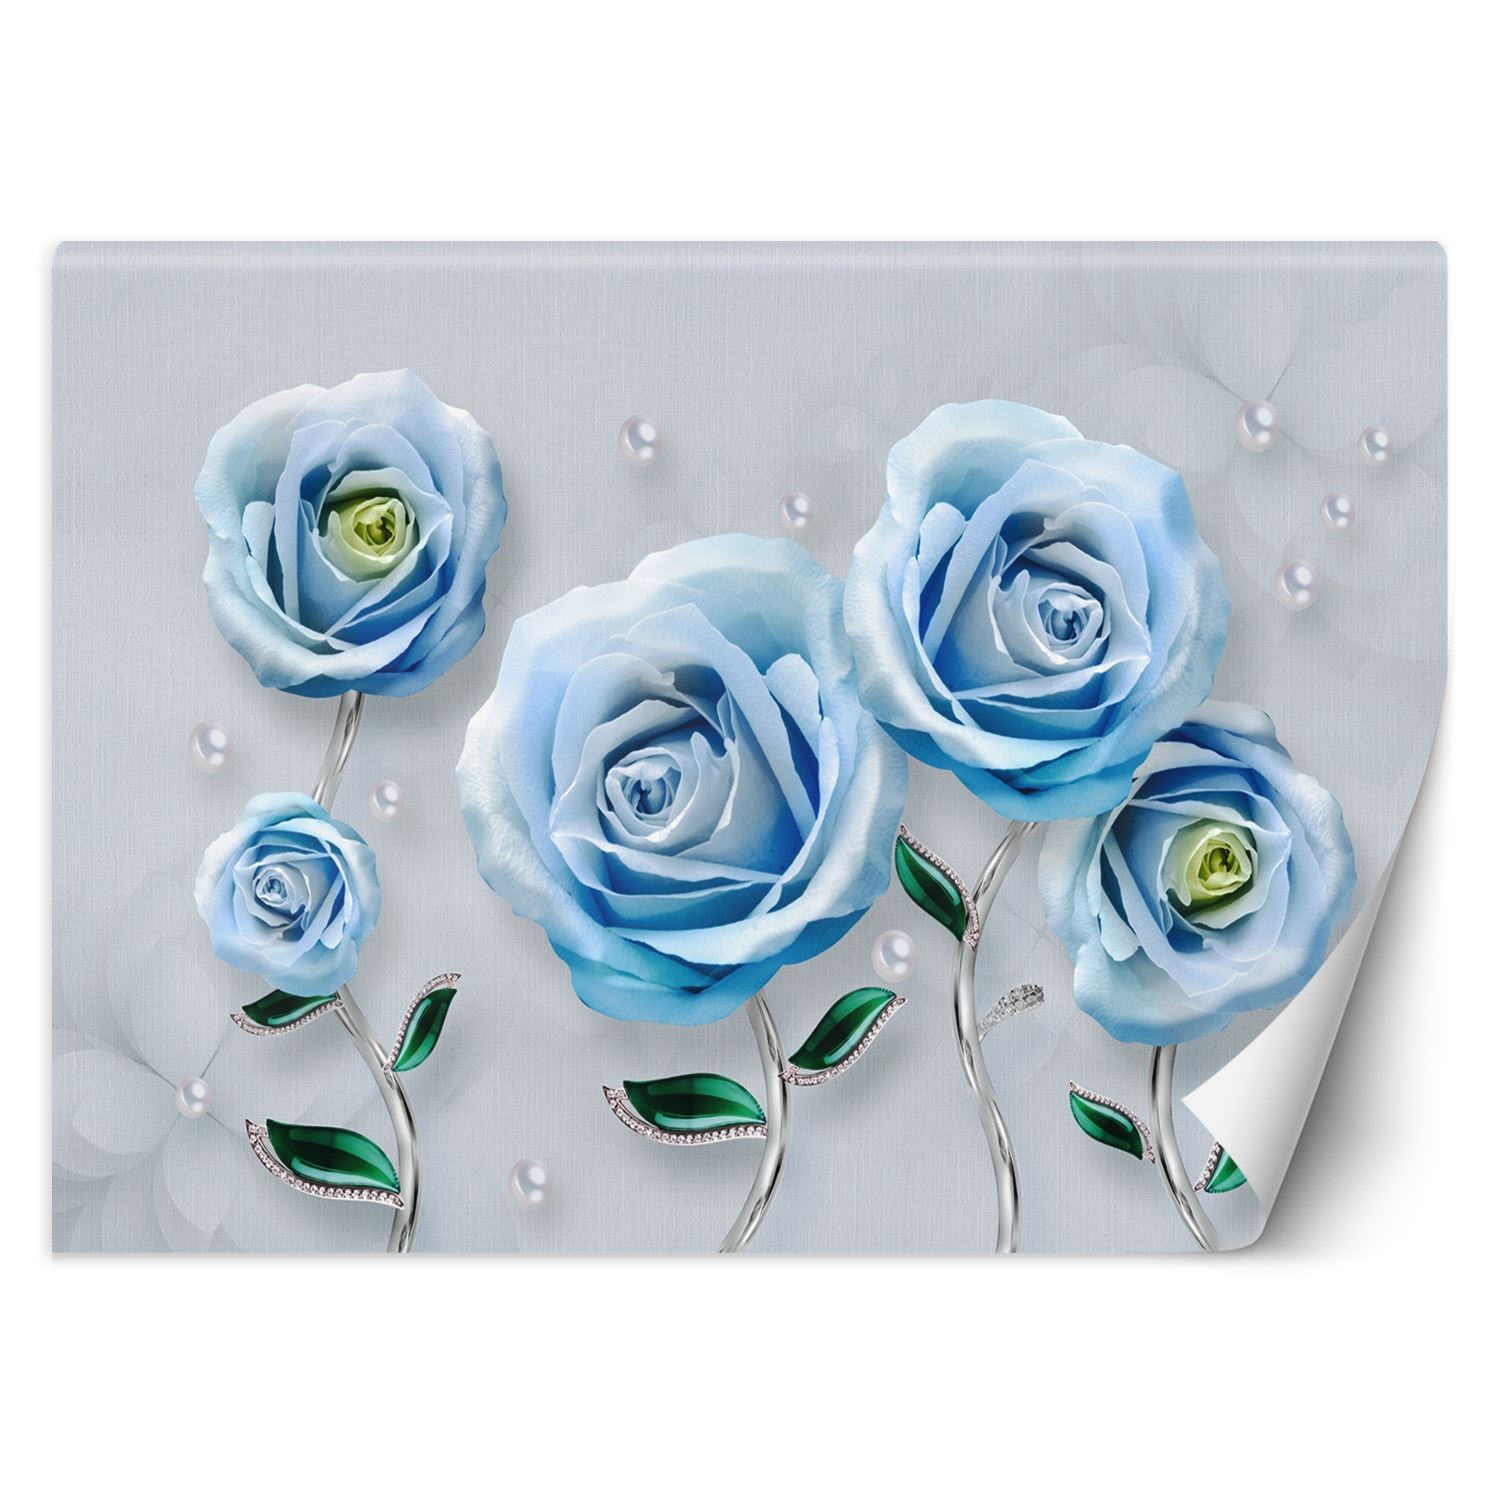 Trend24 – Behang – Blue Roses 3D – Behangpapier – Fotobehang Bloemen – Behang Woonkamer – 450x315x2 cm – Incl. behanglijm